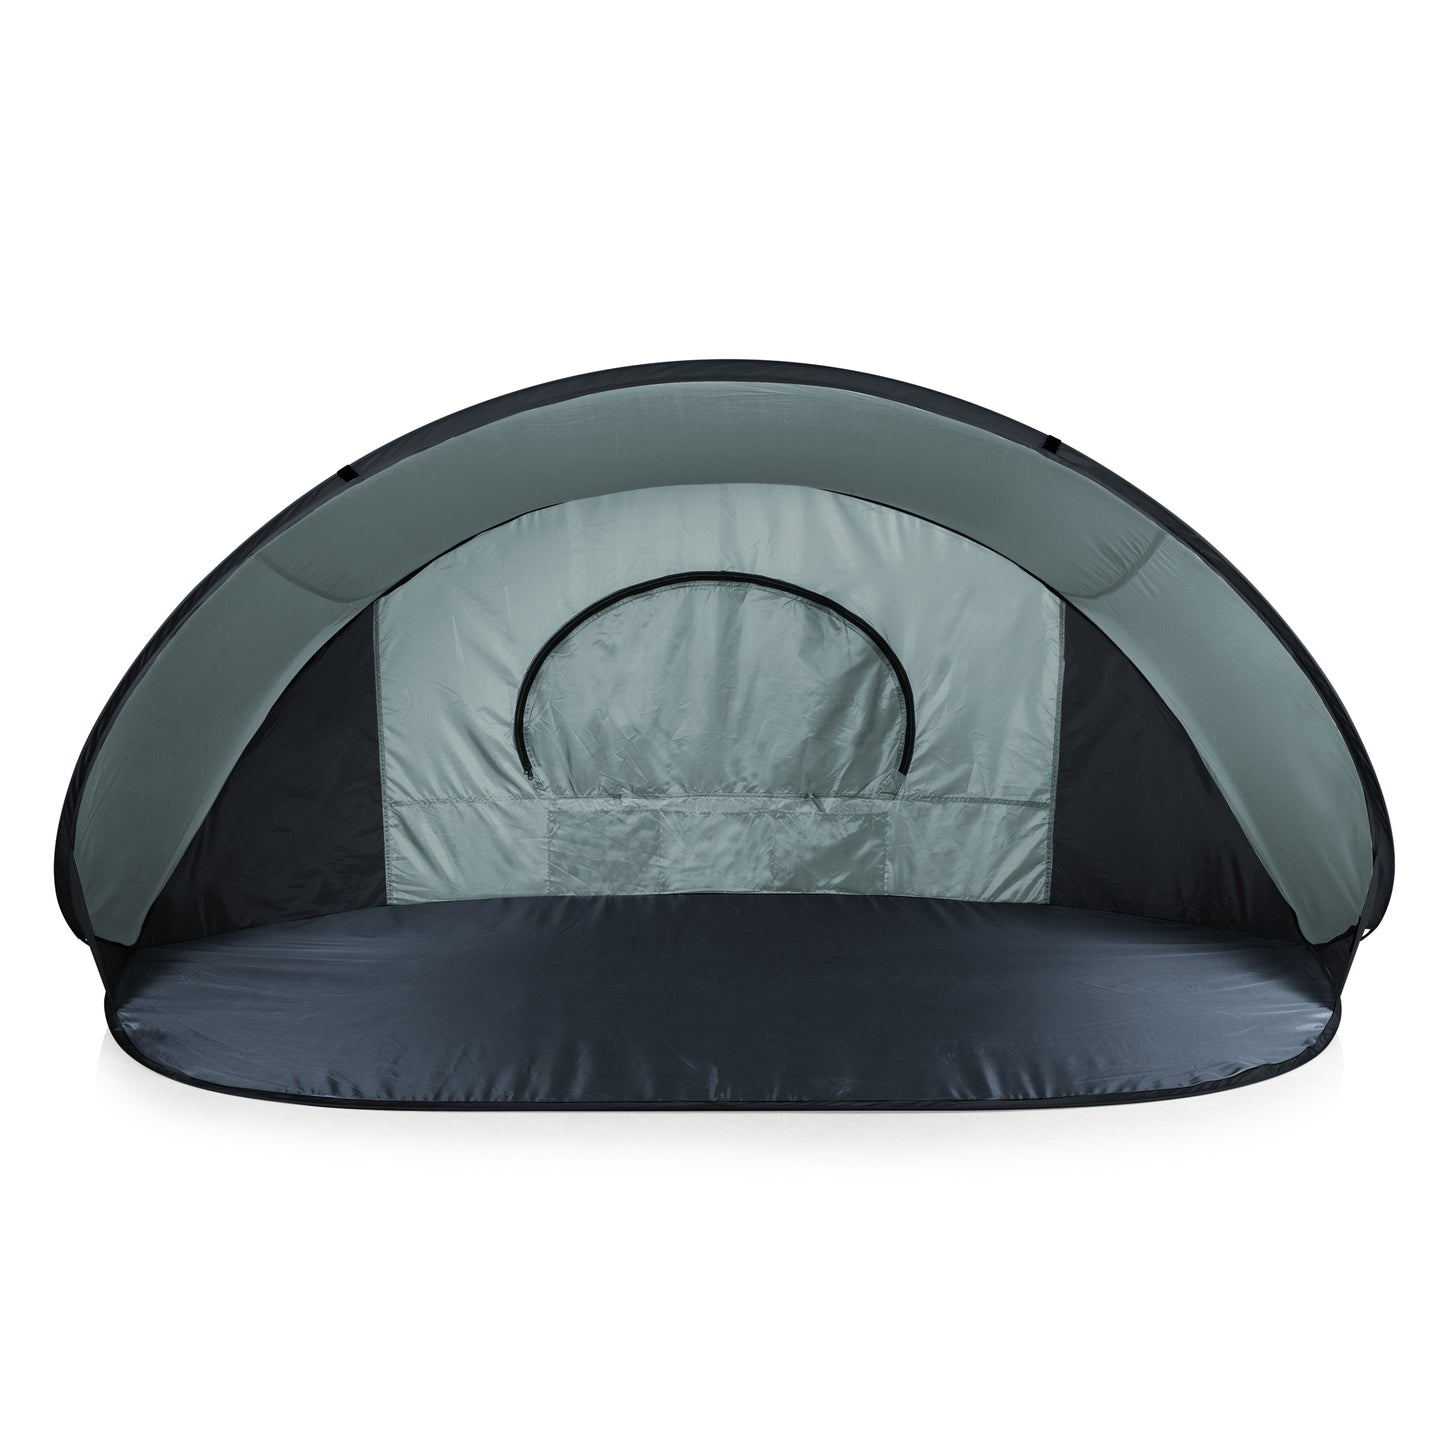 Jacksonville Jaguars - Manta Portable Beach Tent